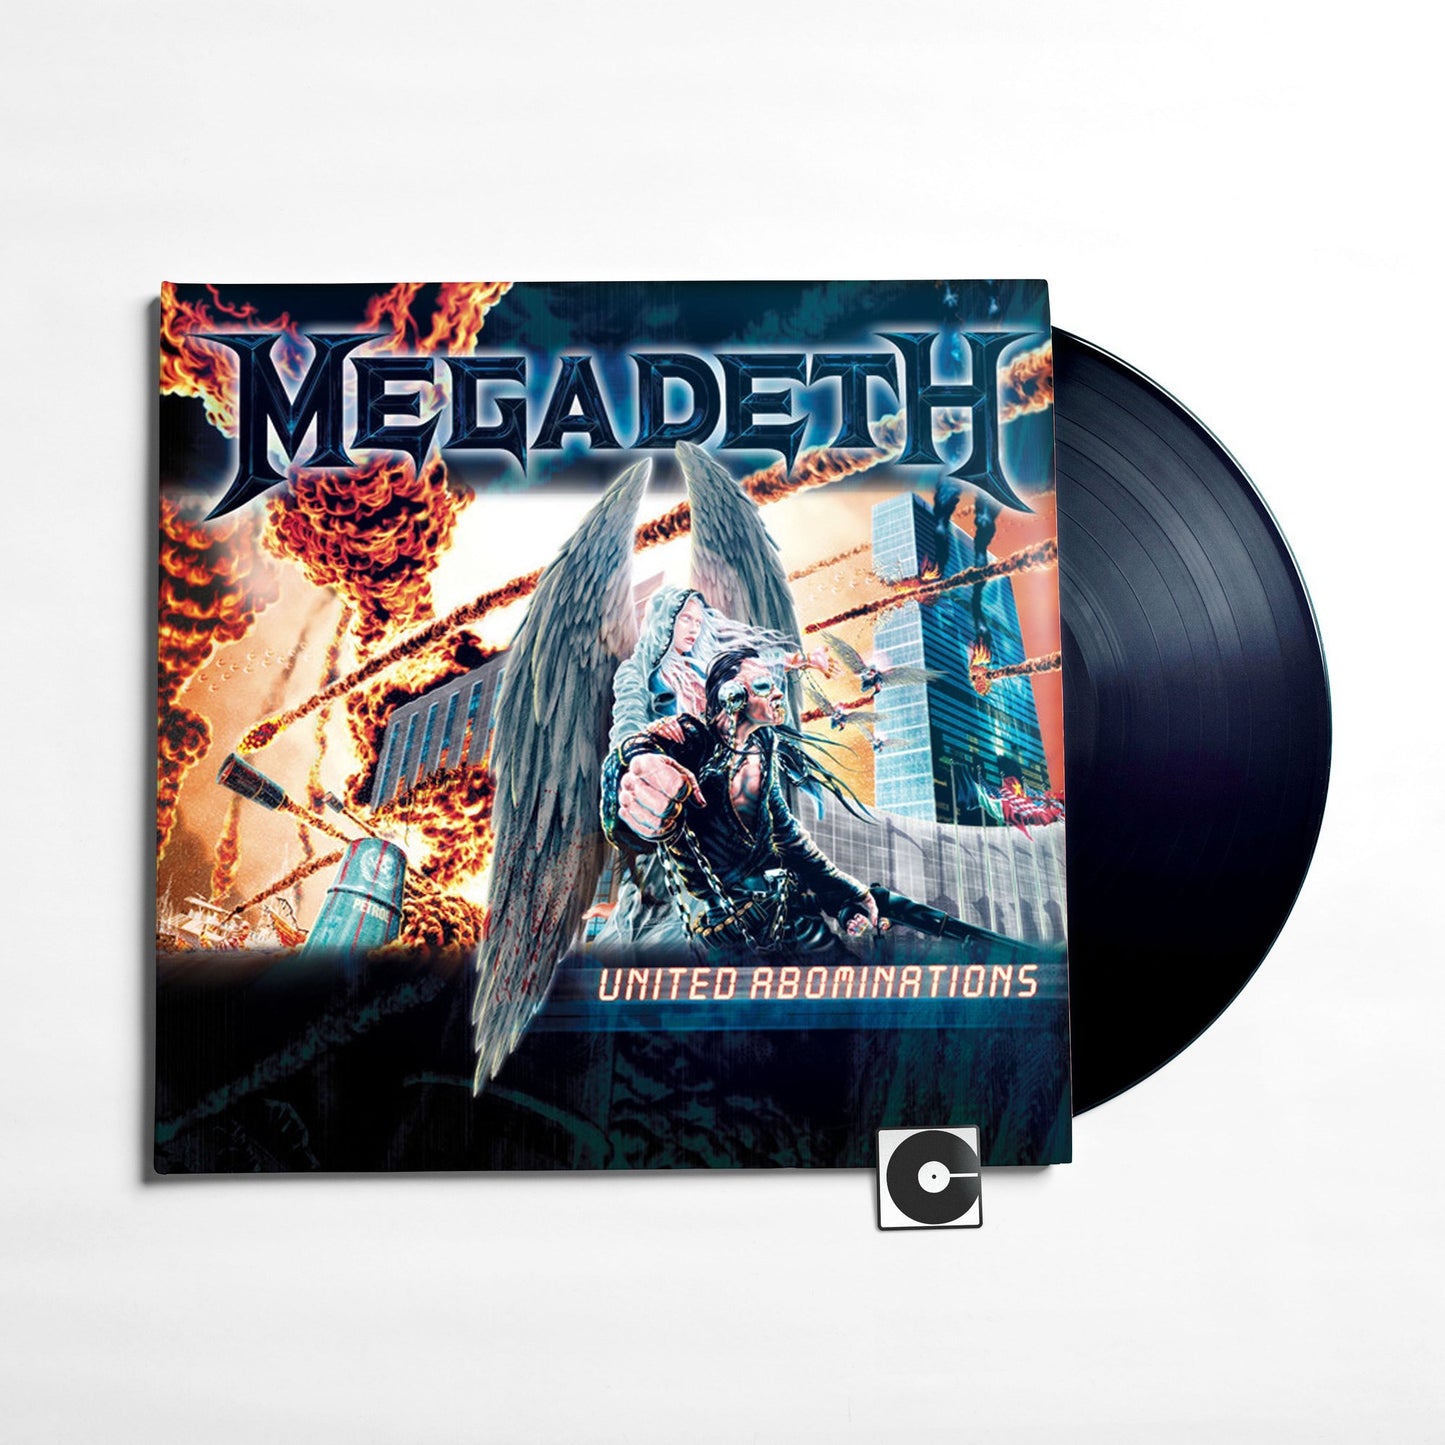 Megadeth - "United Abominations"